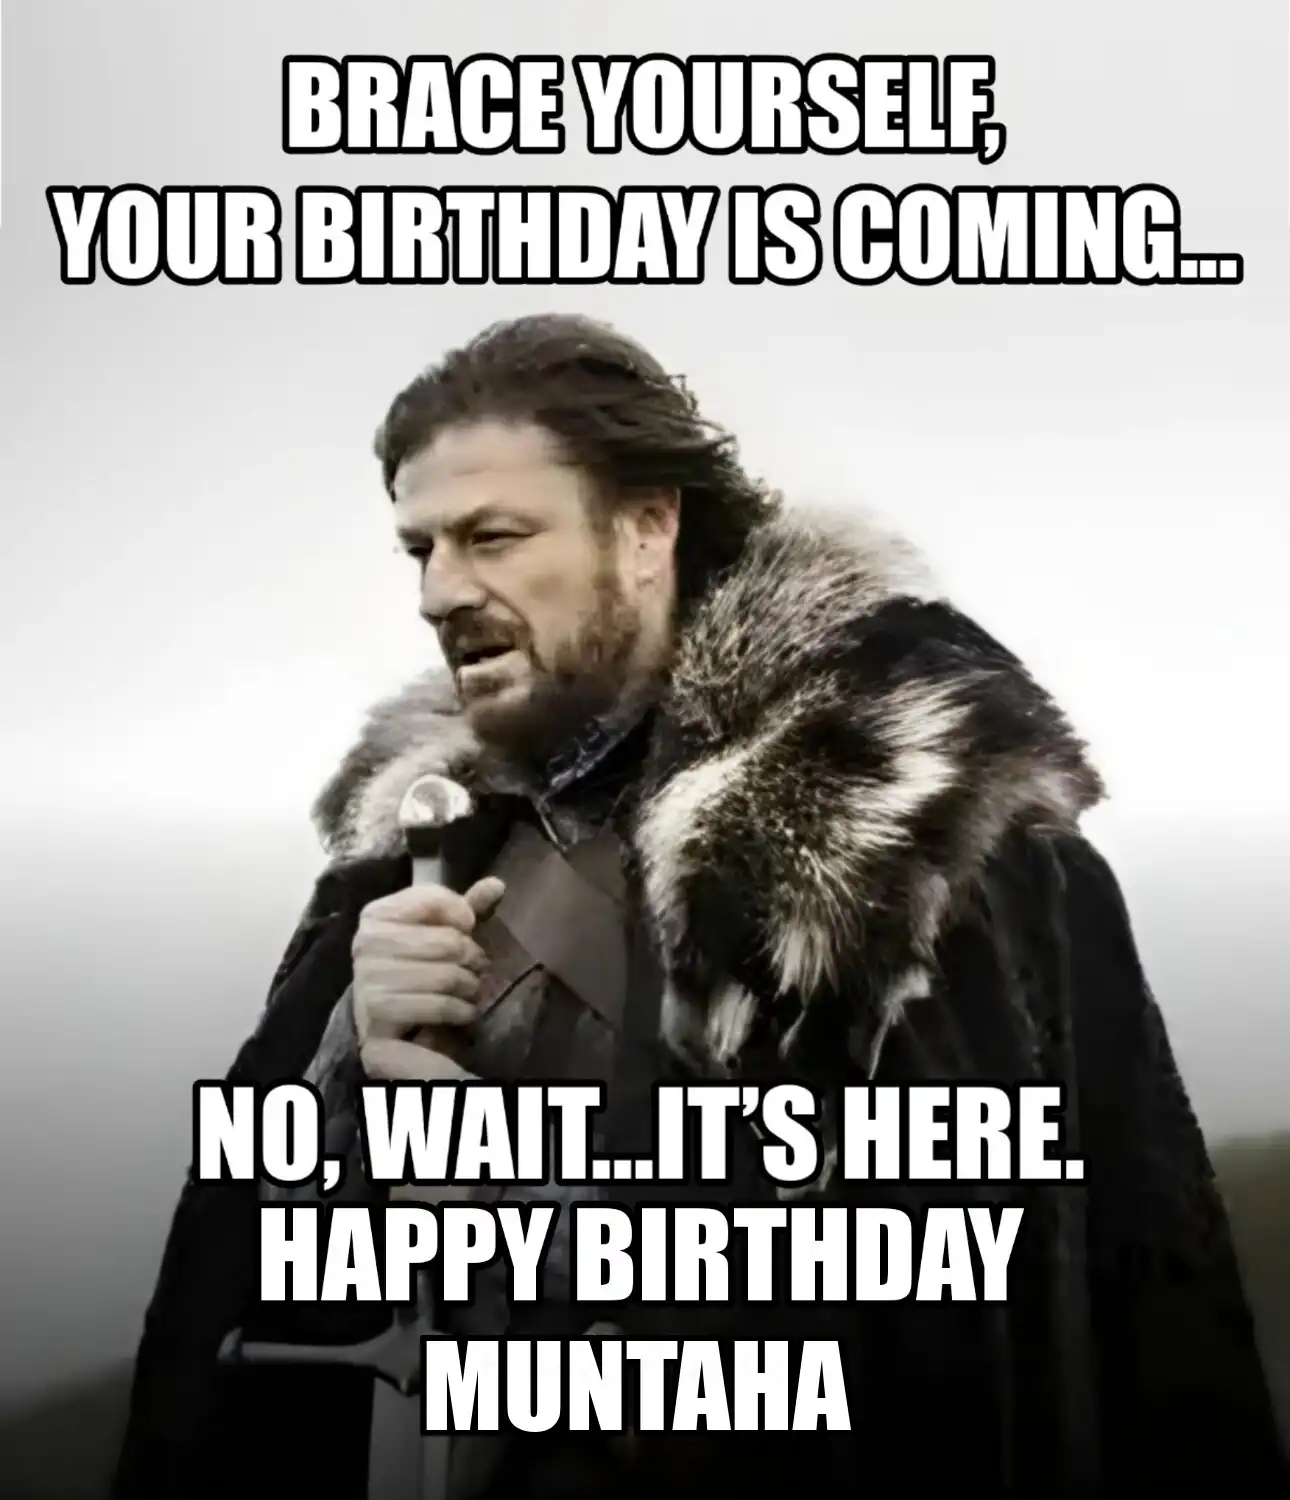 Happy Birthday Muntaha Brace Yourself Your Birthday Is Coming Meme